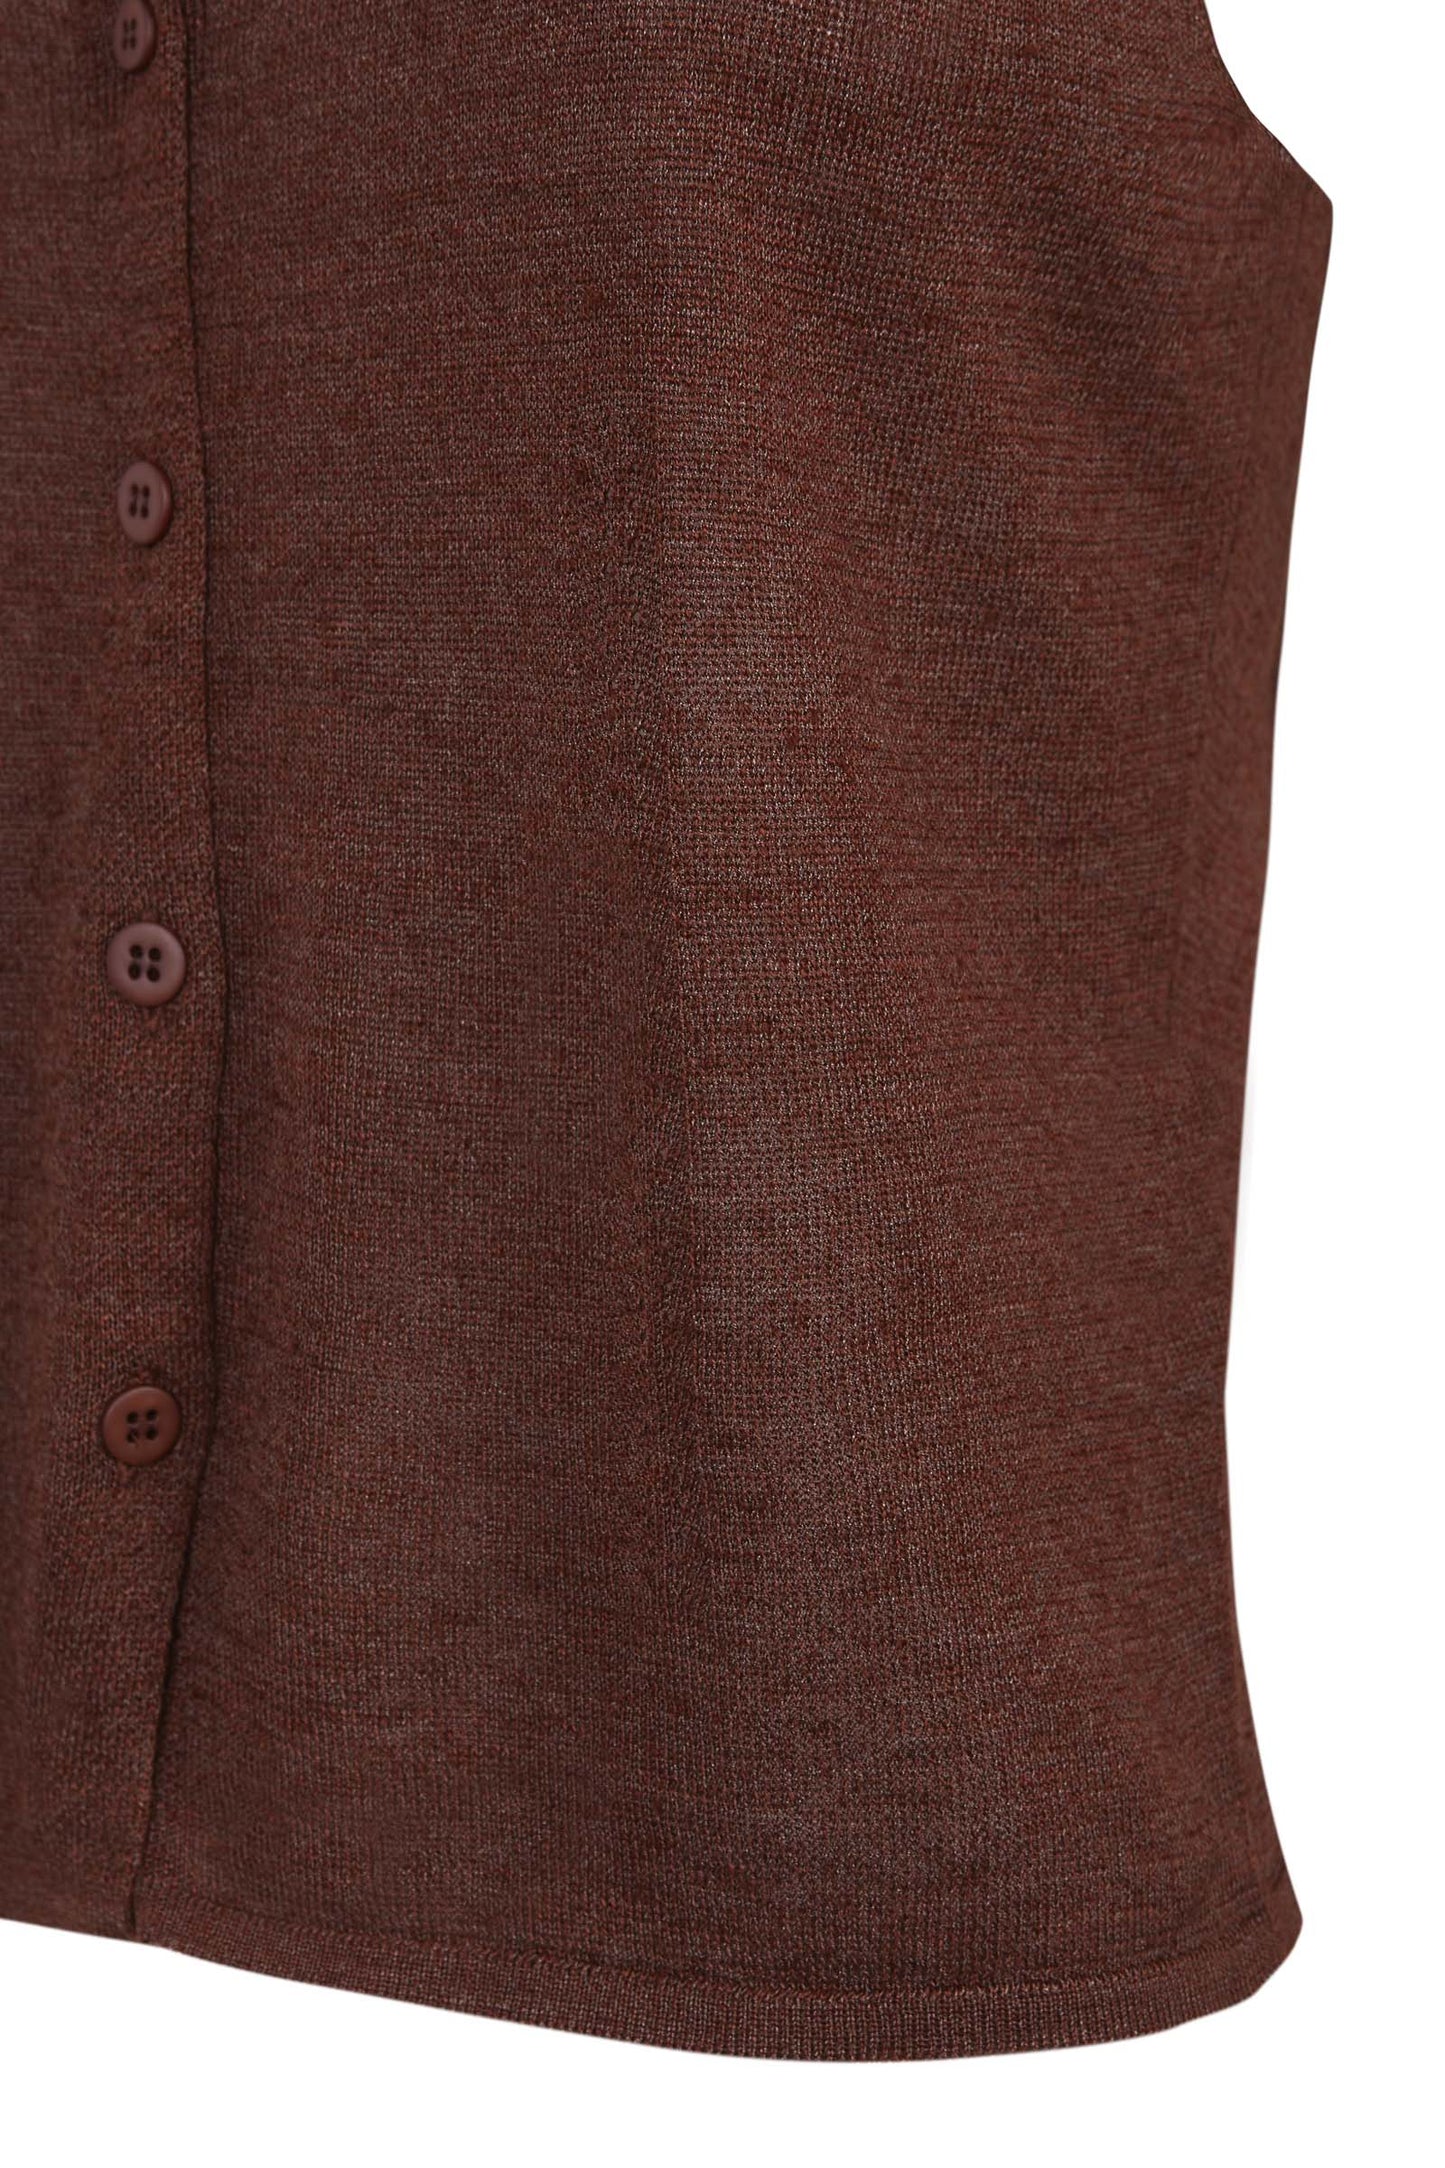 Canton, maroon knitted waistcoat